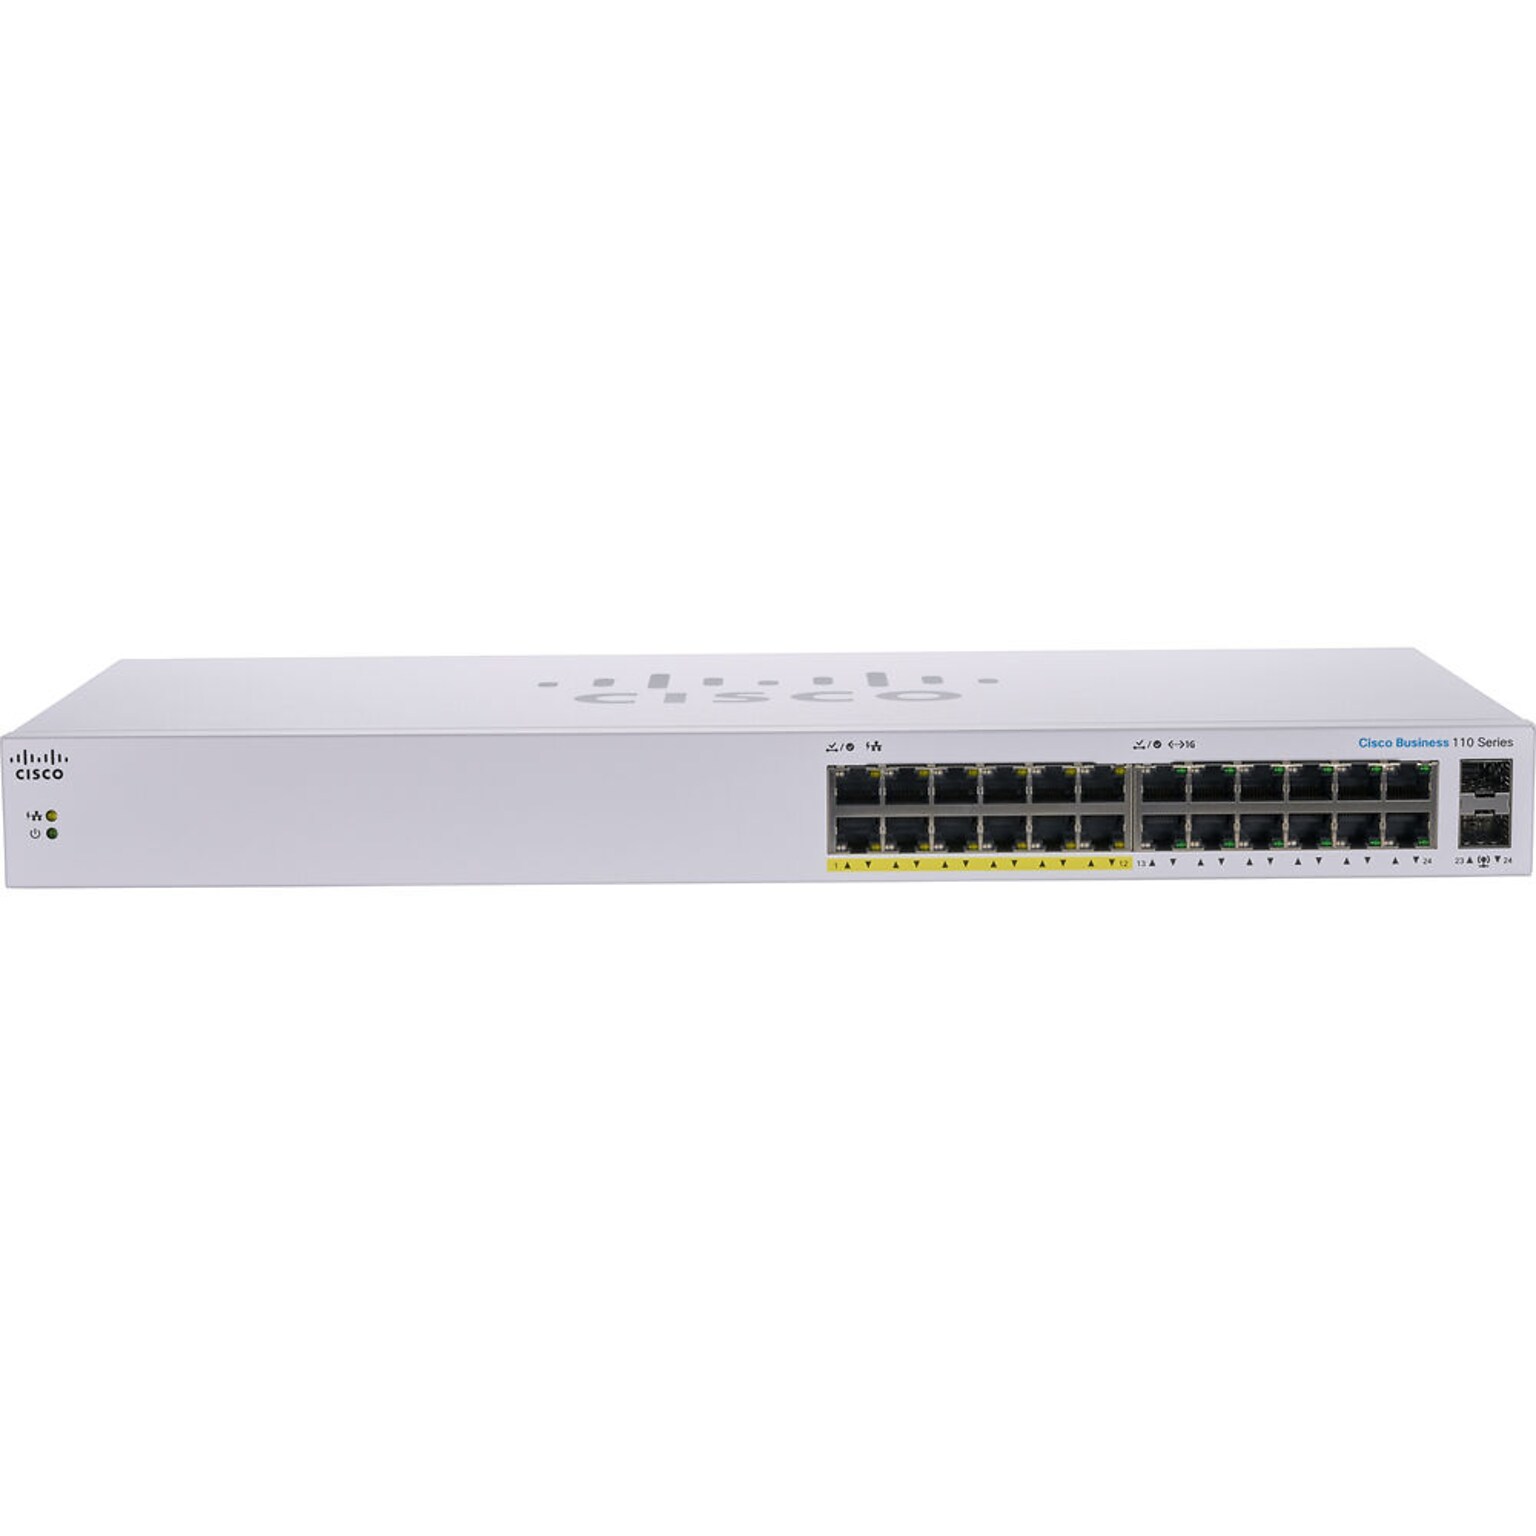 Cisco 110 24-Port Gigabit Ethernet Managed Switch, Silver (CBS11024PPNA)